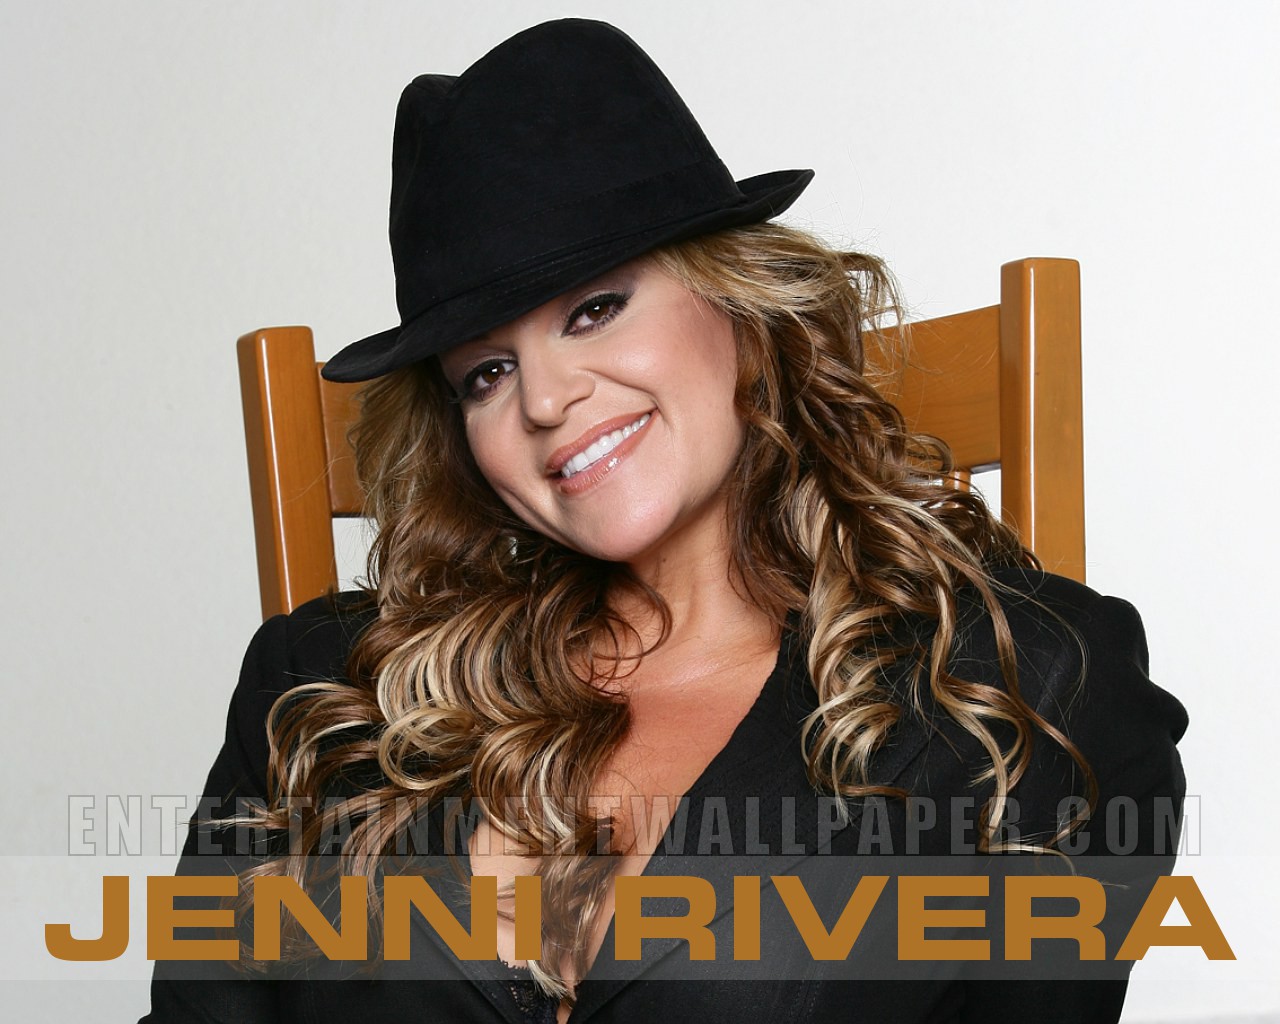 Jenni Rivera's Profile.